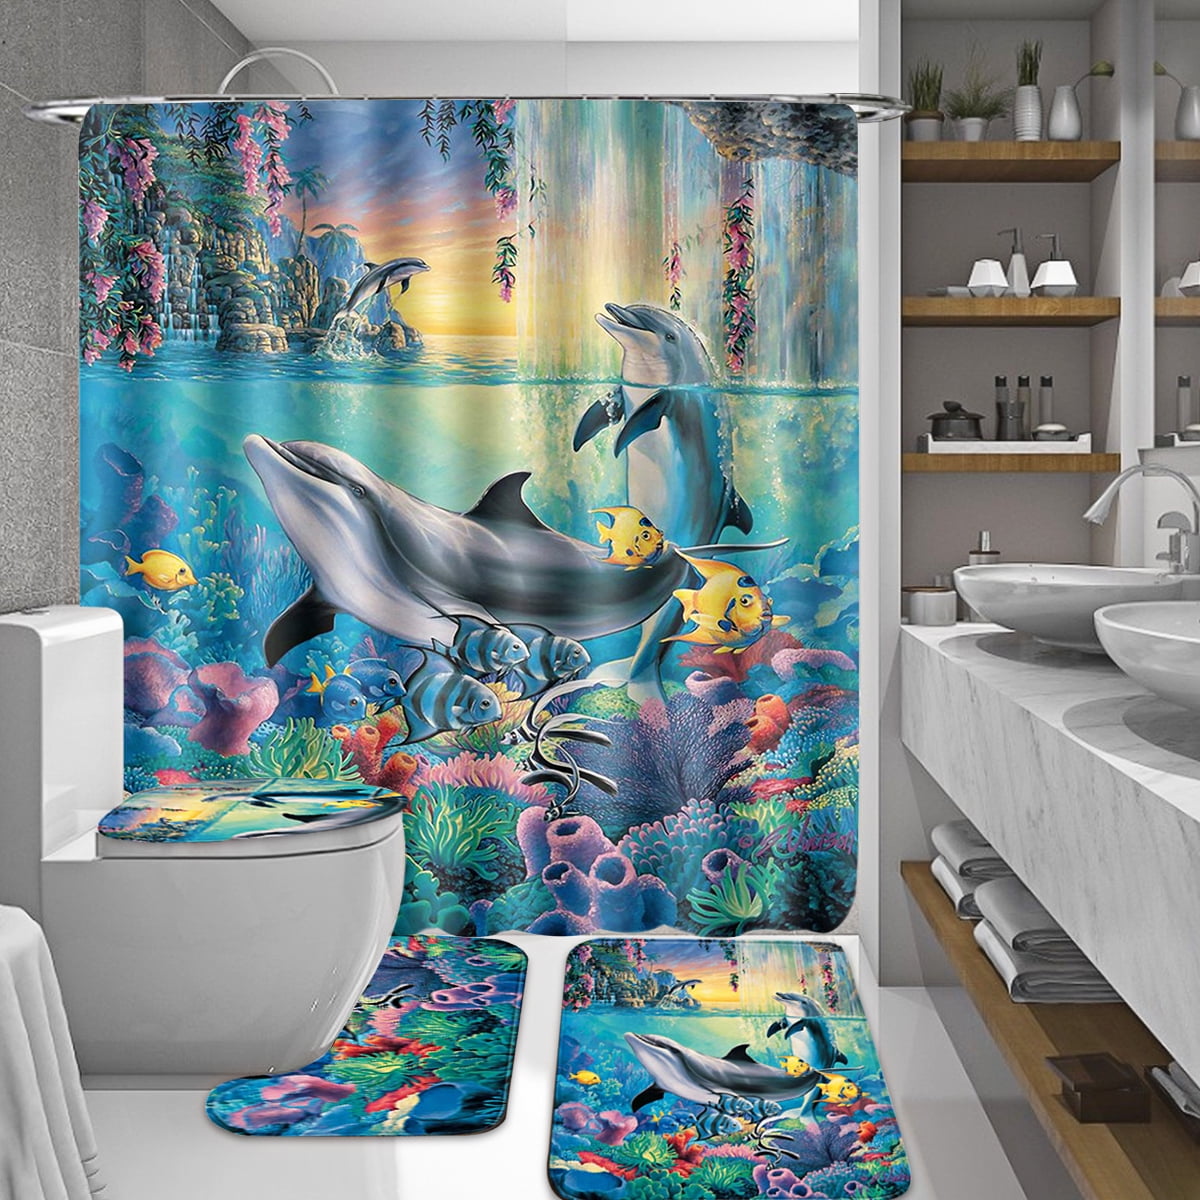 Waterproof Forest Mushroom Bathroom Shower Curtain Non-Slip Toilet Cover Mat Set 